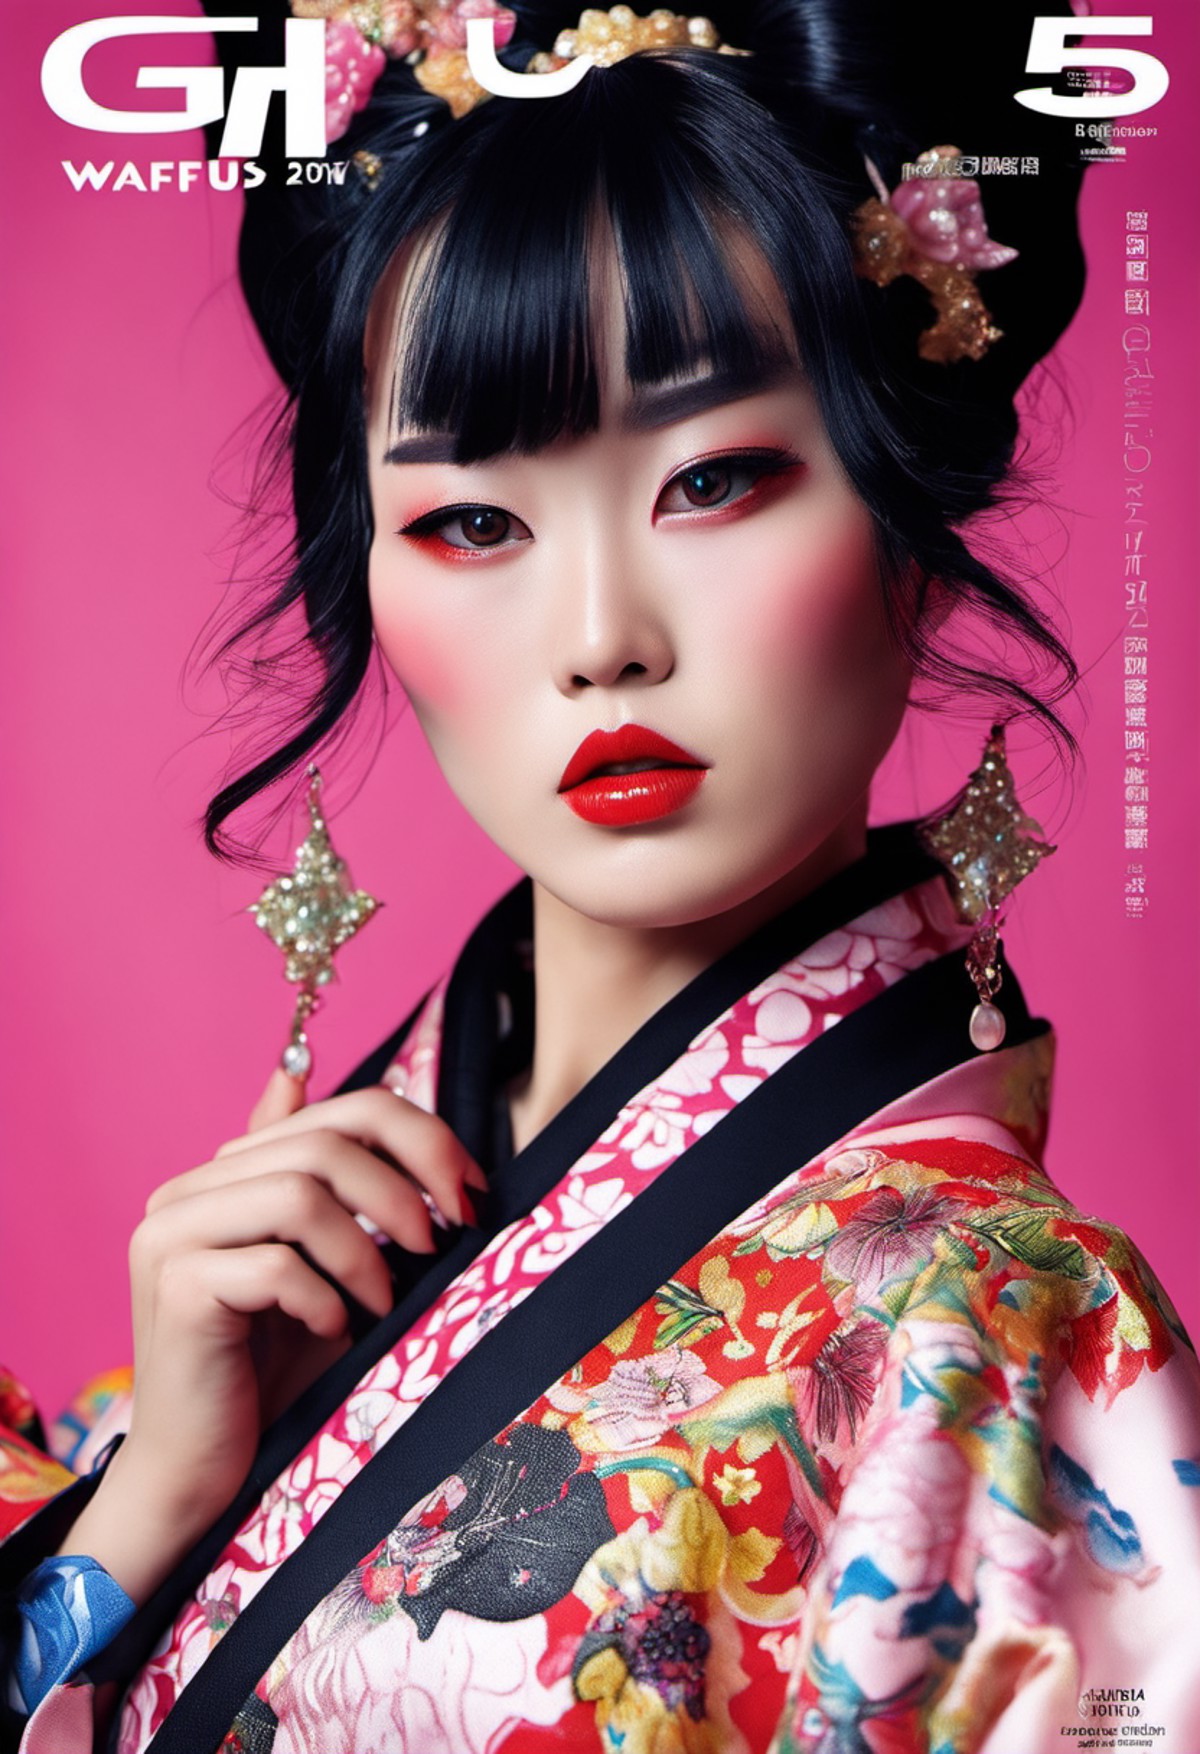 ('Waifu' Magazine cover:1.3) (minimal design, clear title header), (Candid 1.3), photo of a vivacious (Japanese|Israeli) s...